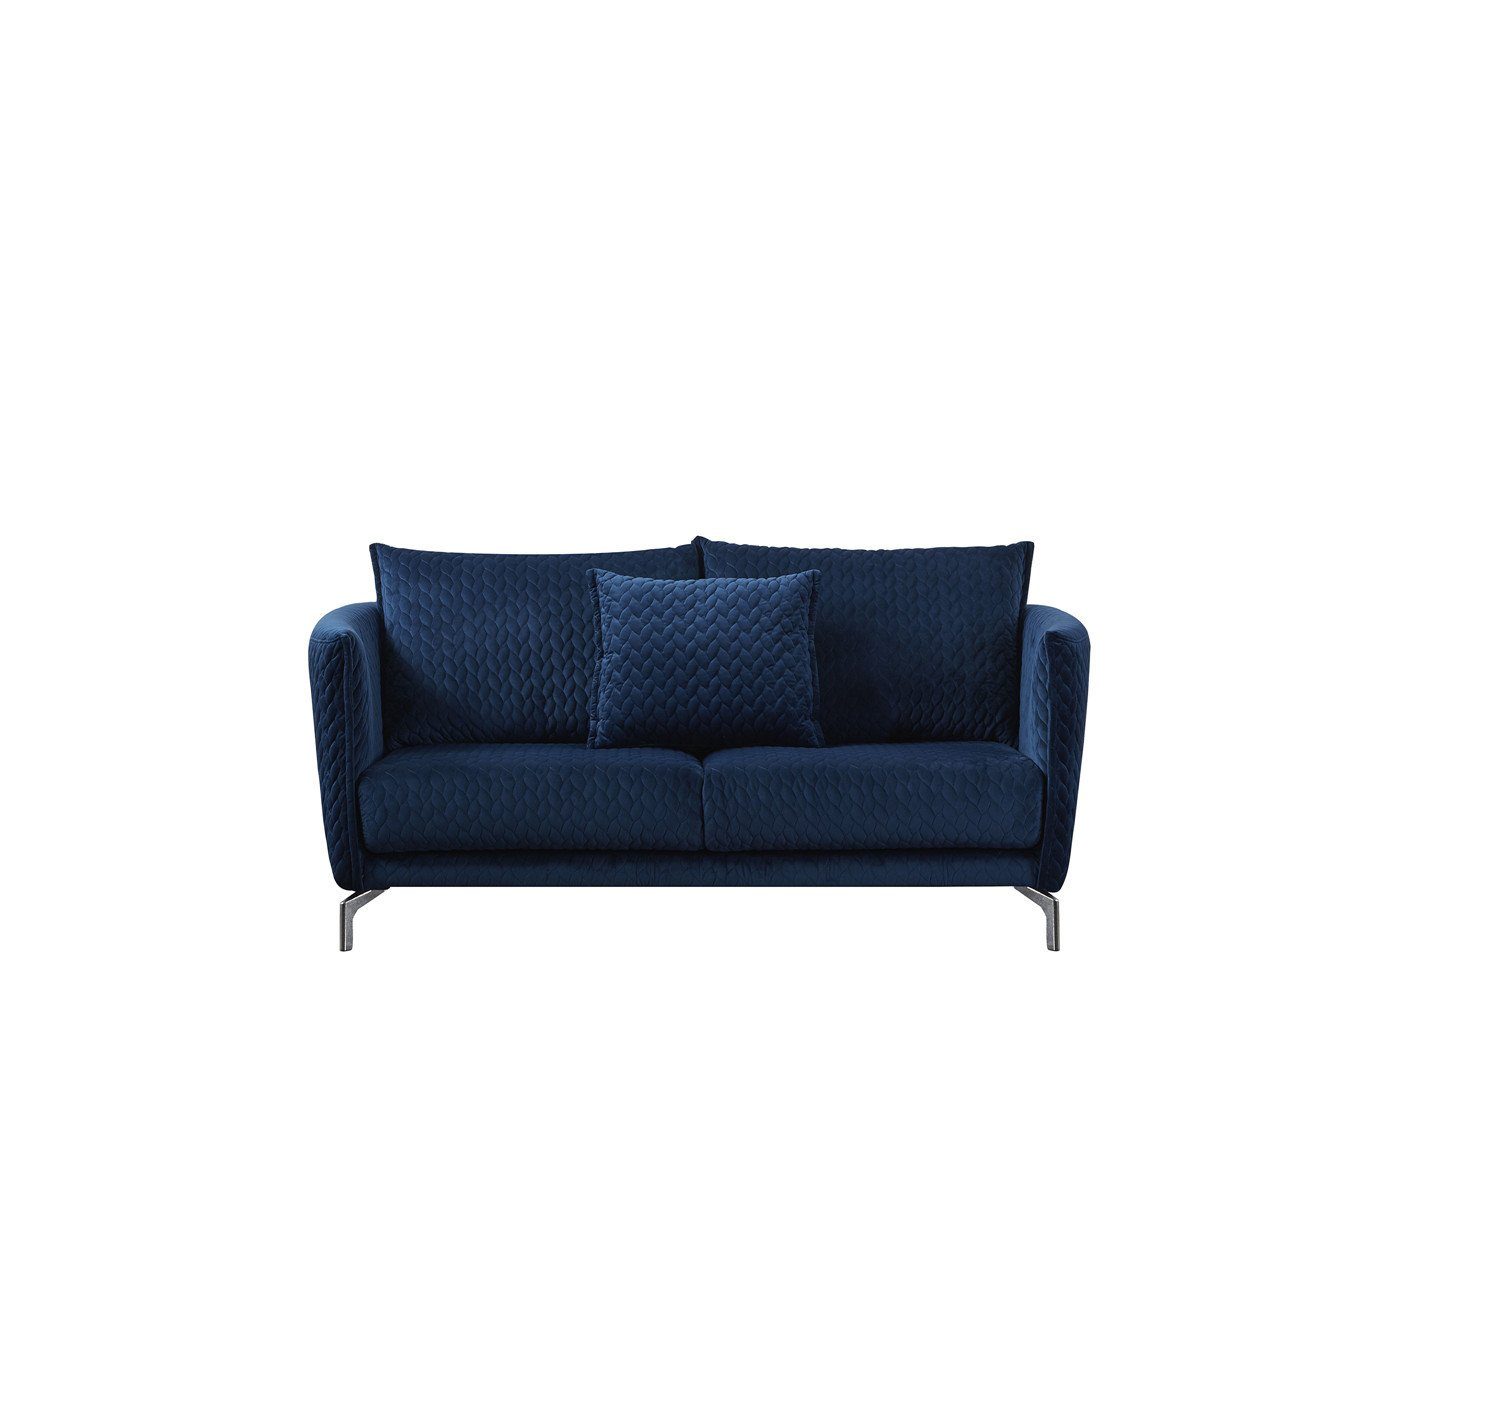 Design Textil Sitzer Sofa Sitz Luxus Polster Couch Stoff Sofa JVmoebel 3 Sofa,